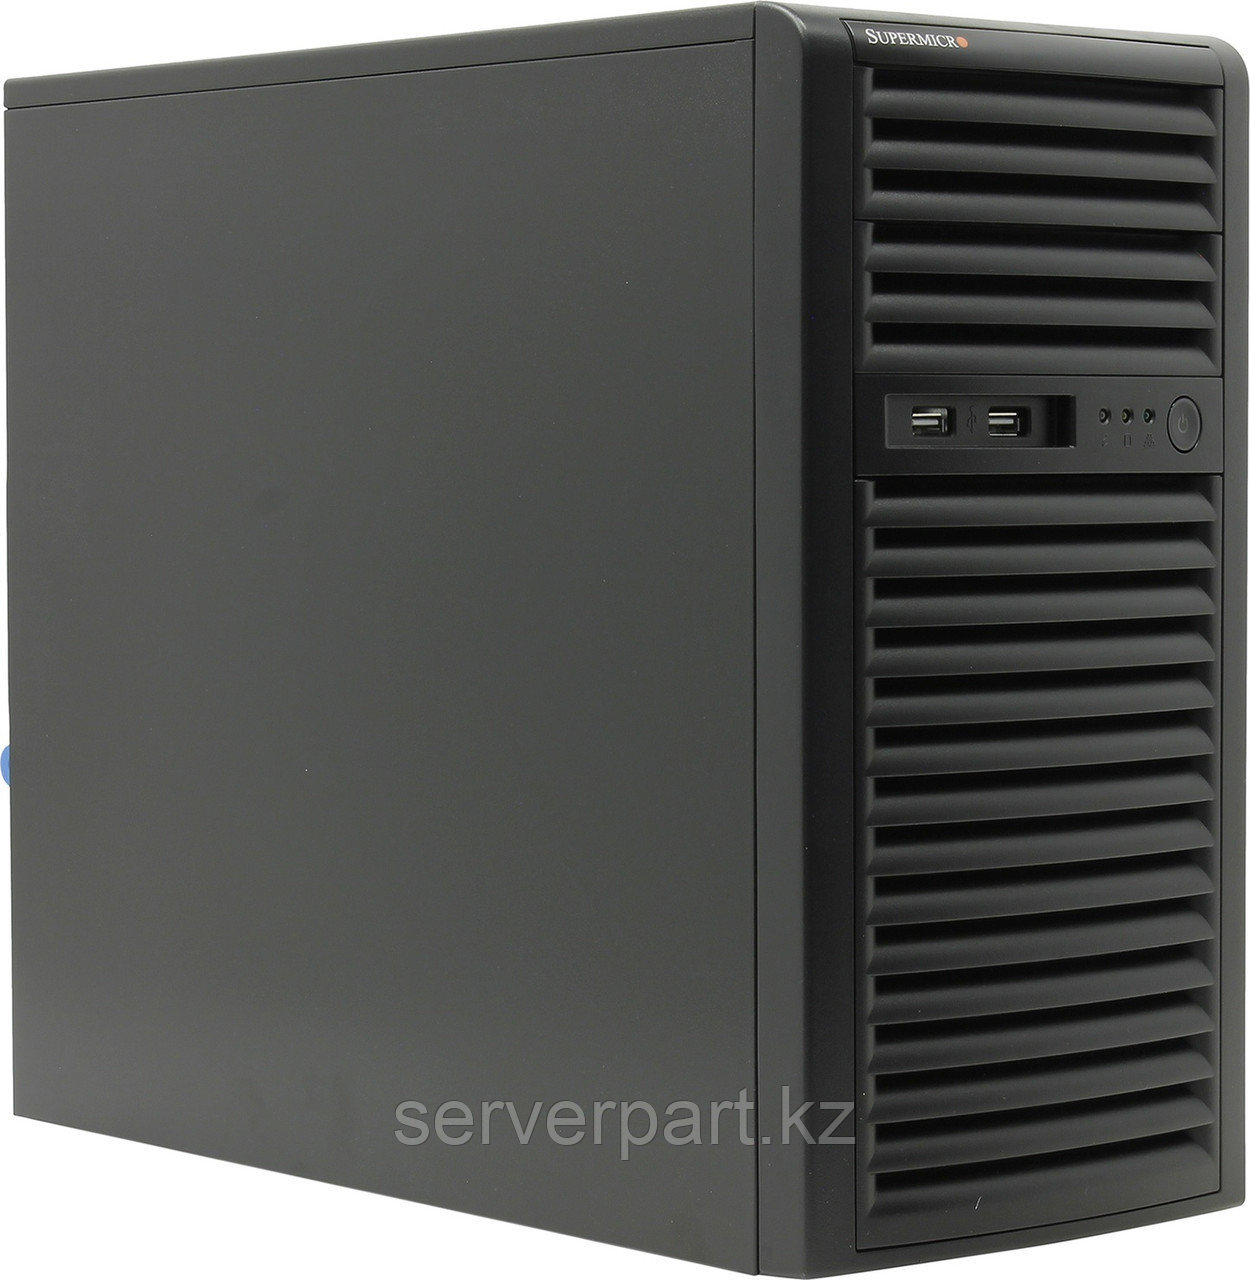 Сервер Supermicro SYS-5039C Tower 4LFF/4-core intel xeon E2124 3.3GHz/64GB UDIMM nECC/1x240GB SSD MU Hyb